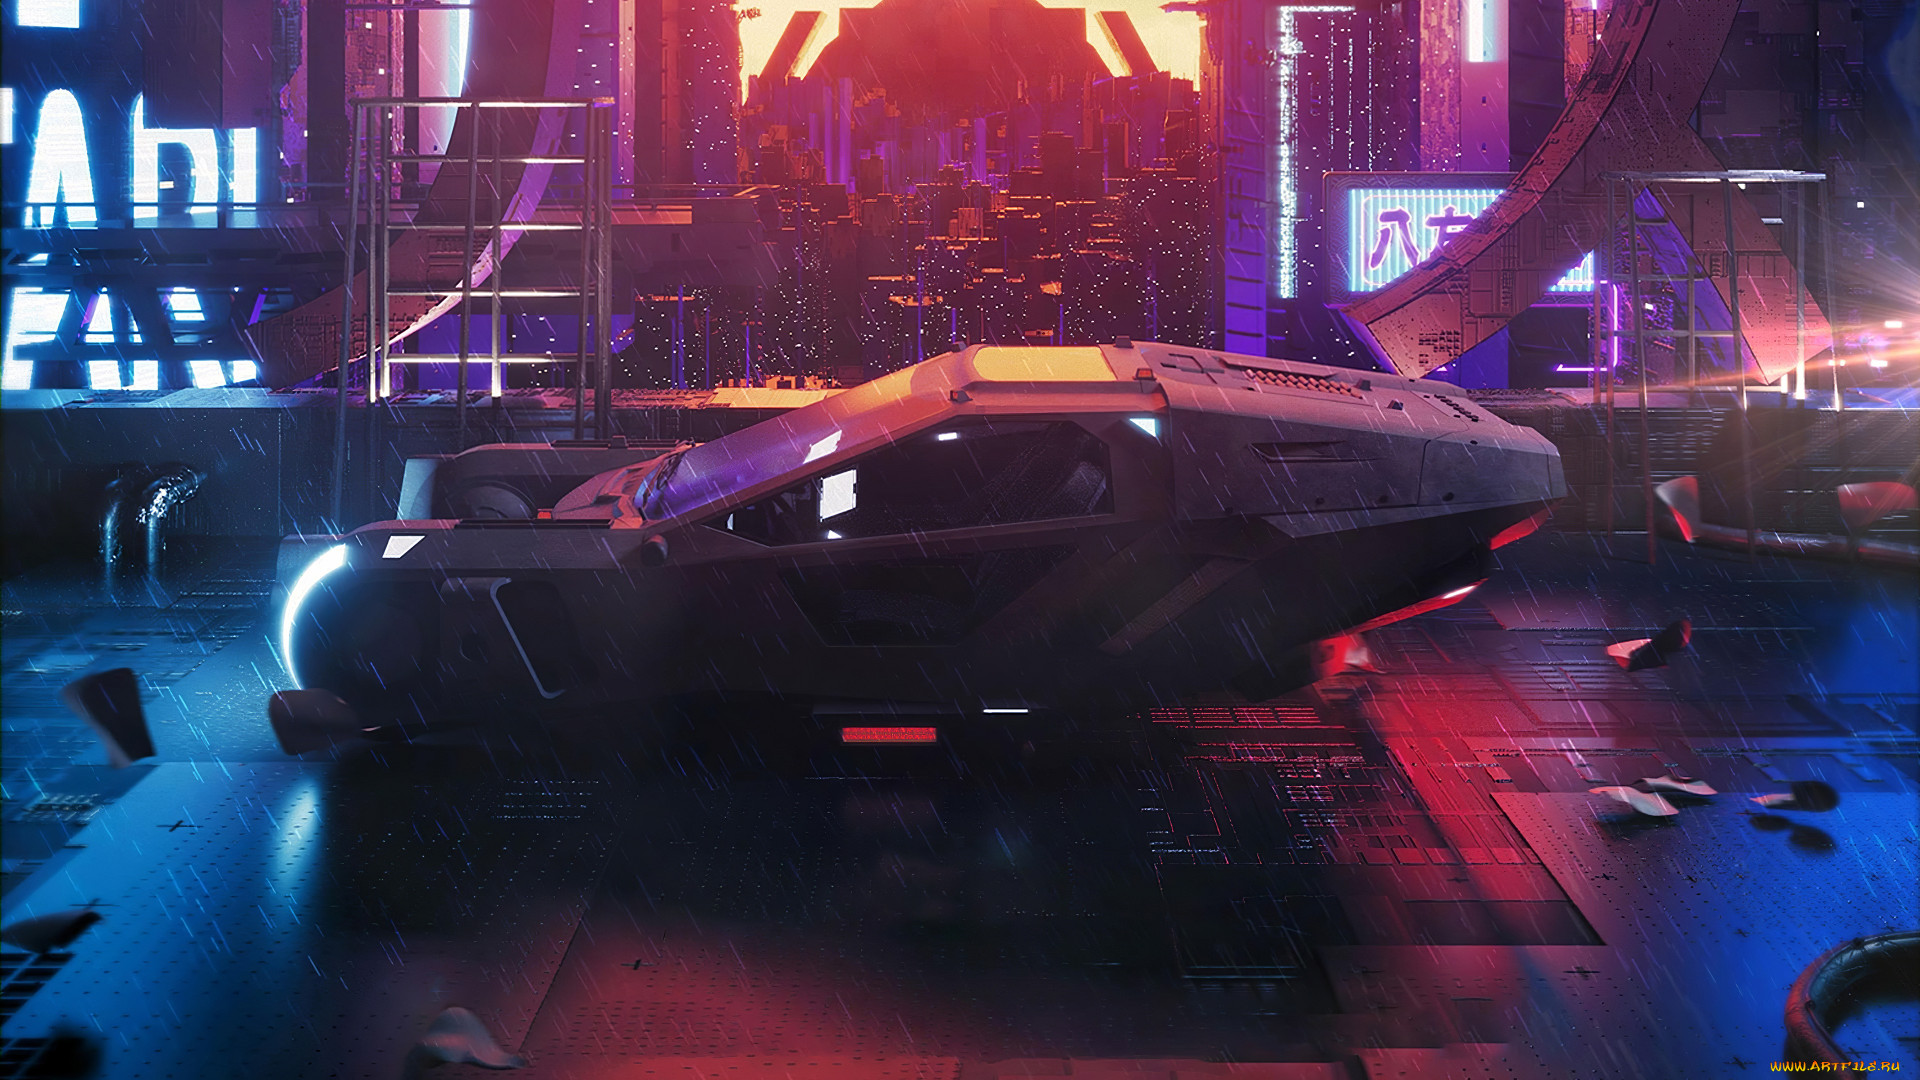 General 1920x1080 vehicle car dark cyberpunk futuristic artwork Blade Runner retrowave Oliver Rankin